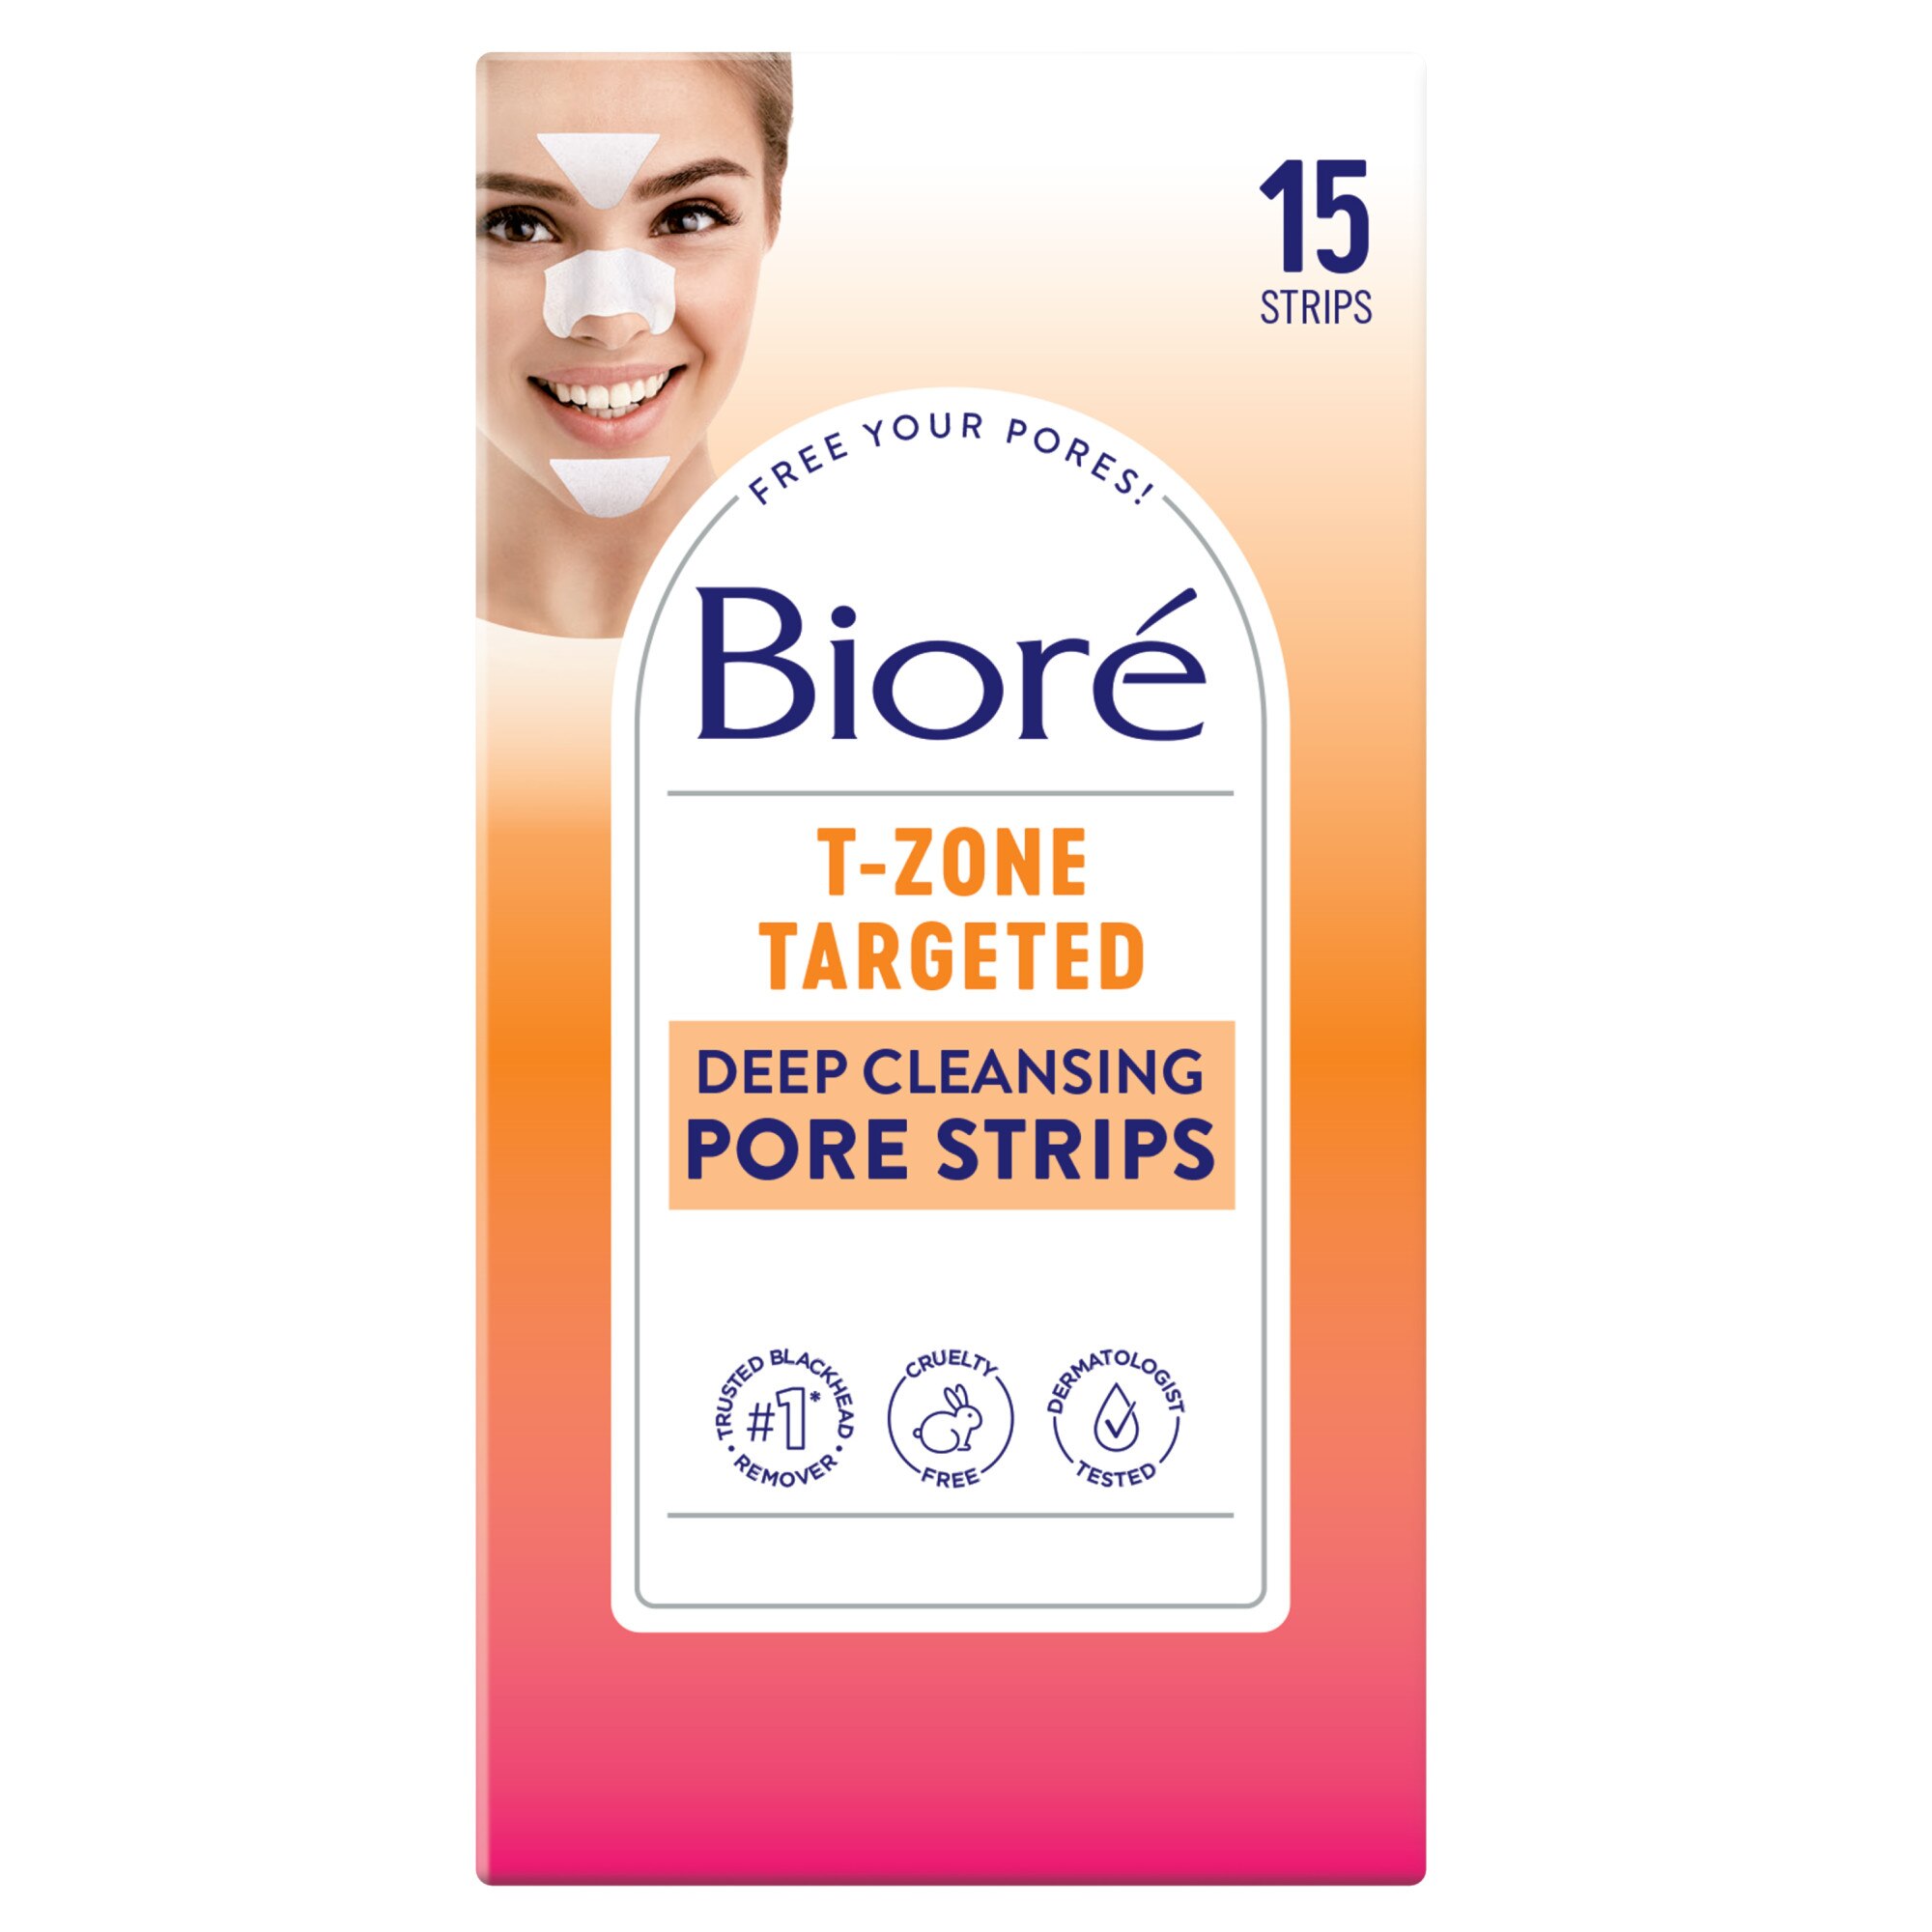 Biore T-Zone Deep Cleansing Pore Strips, Blackhead Remover Nose Strips, 15CT